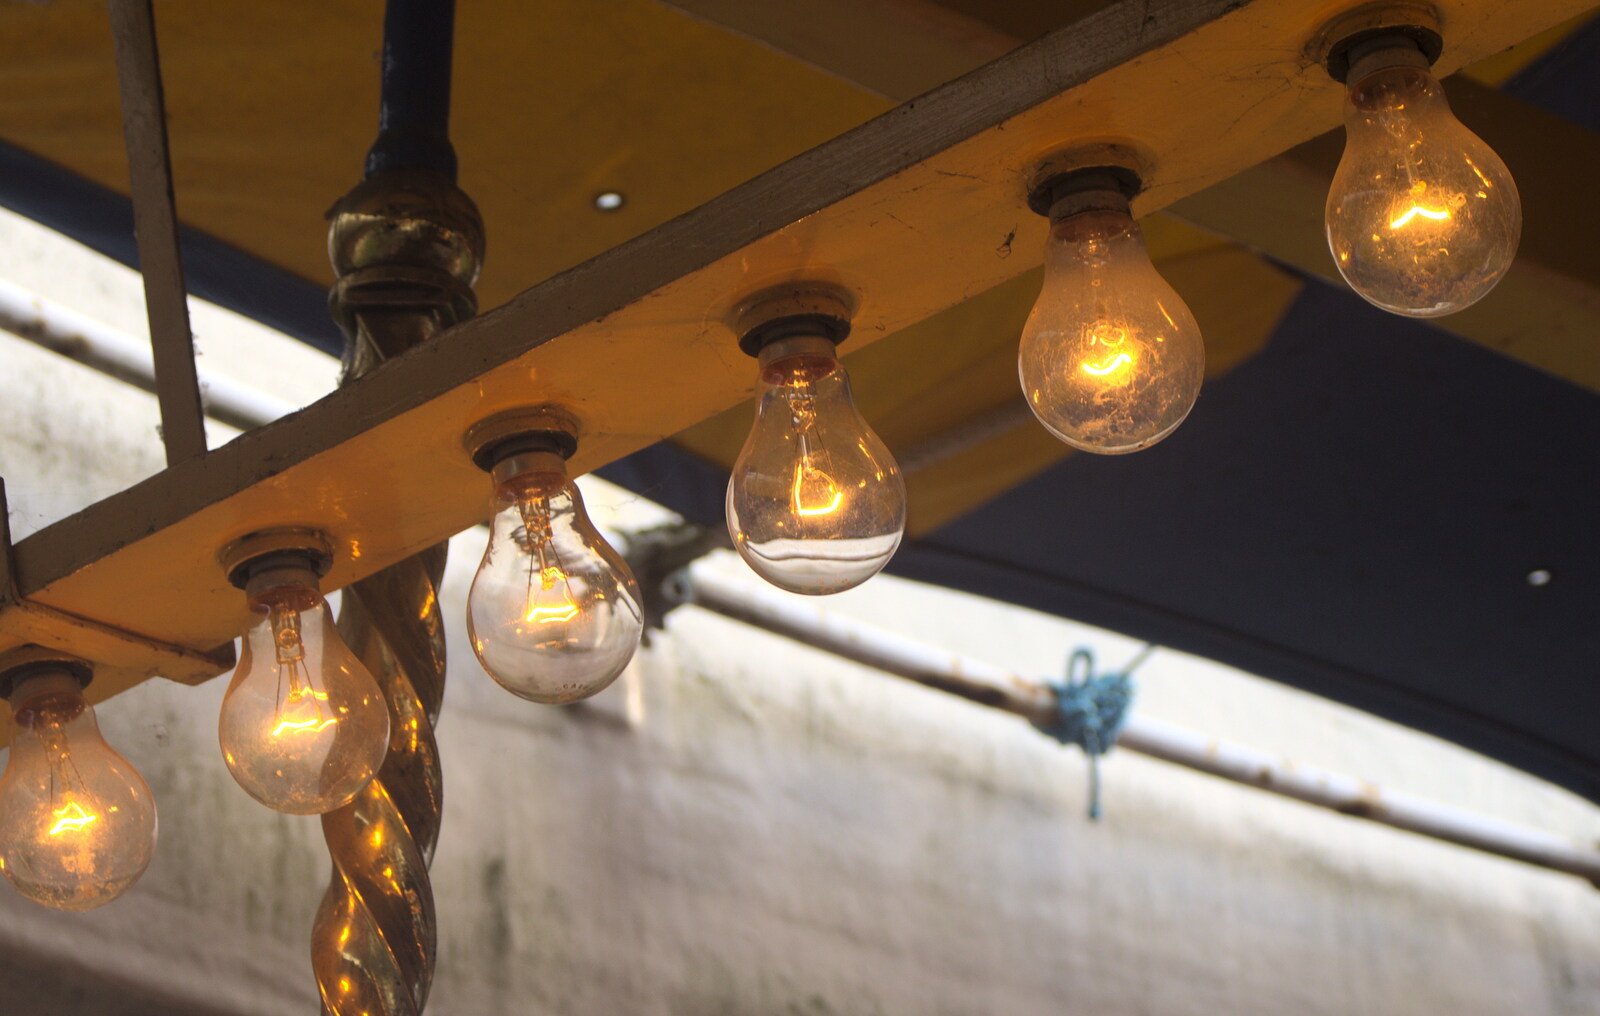 More old-school filament lightbulbs from Alan Bloom's Gardens, Bressingham, Norfolk - 6th October 2012